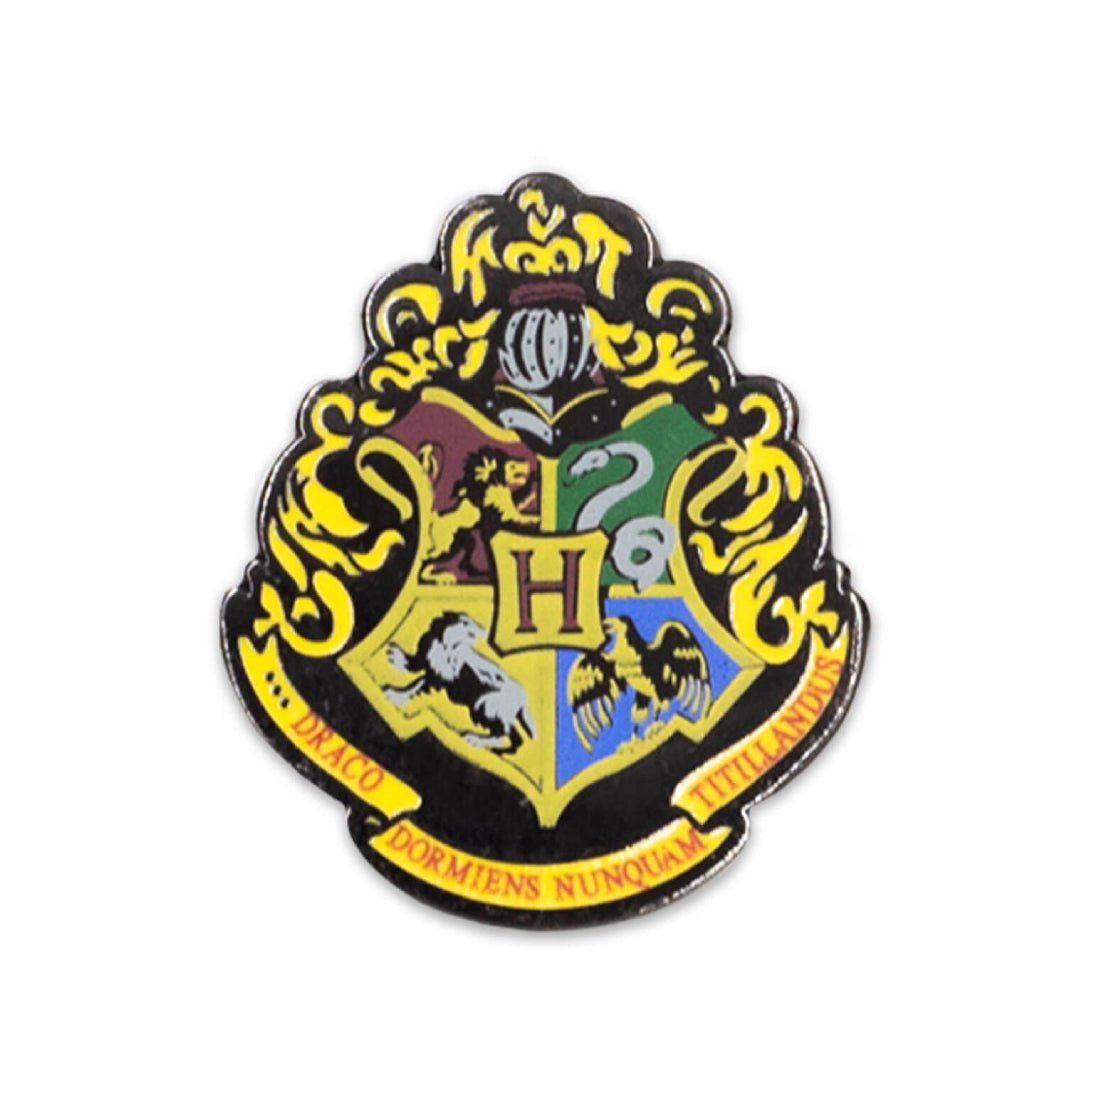 Harry Potter - Hogwarts Pin Enamil Badge - أكسسوار - Store 974 | ستور ٩٧٤